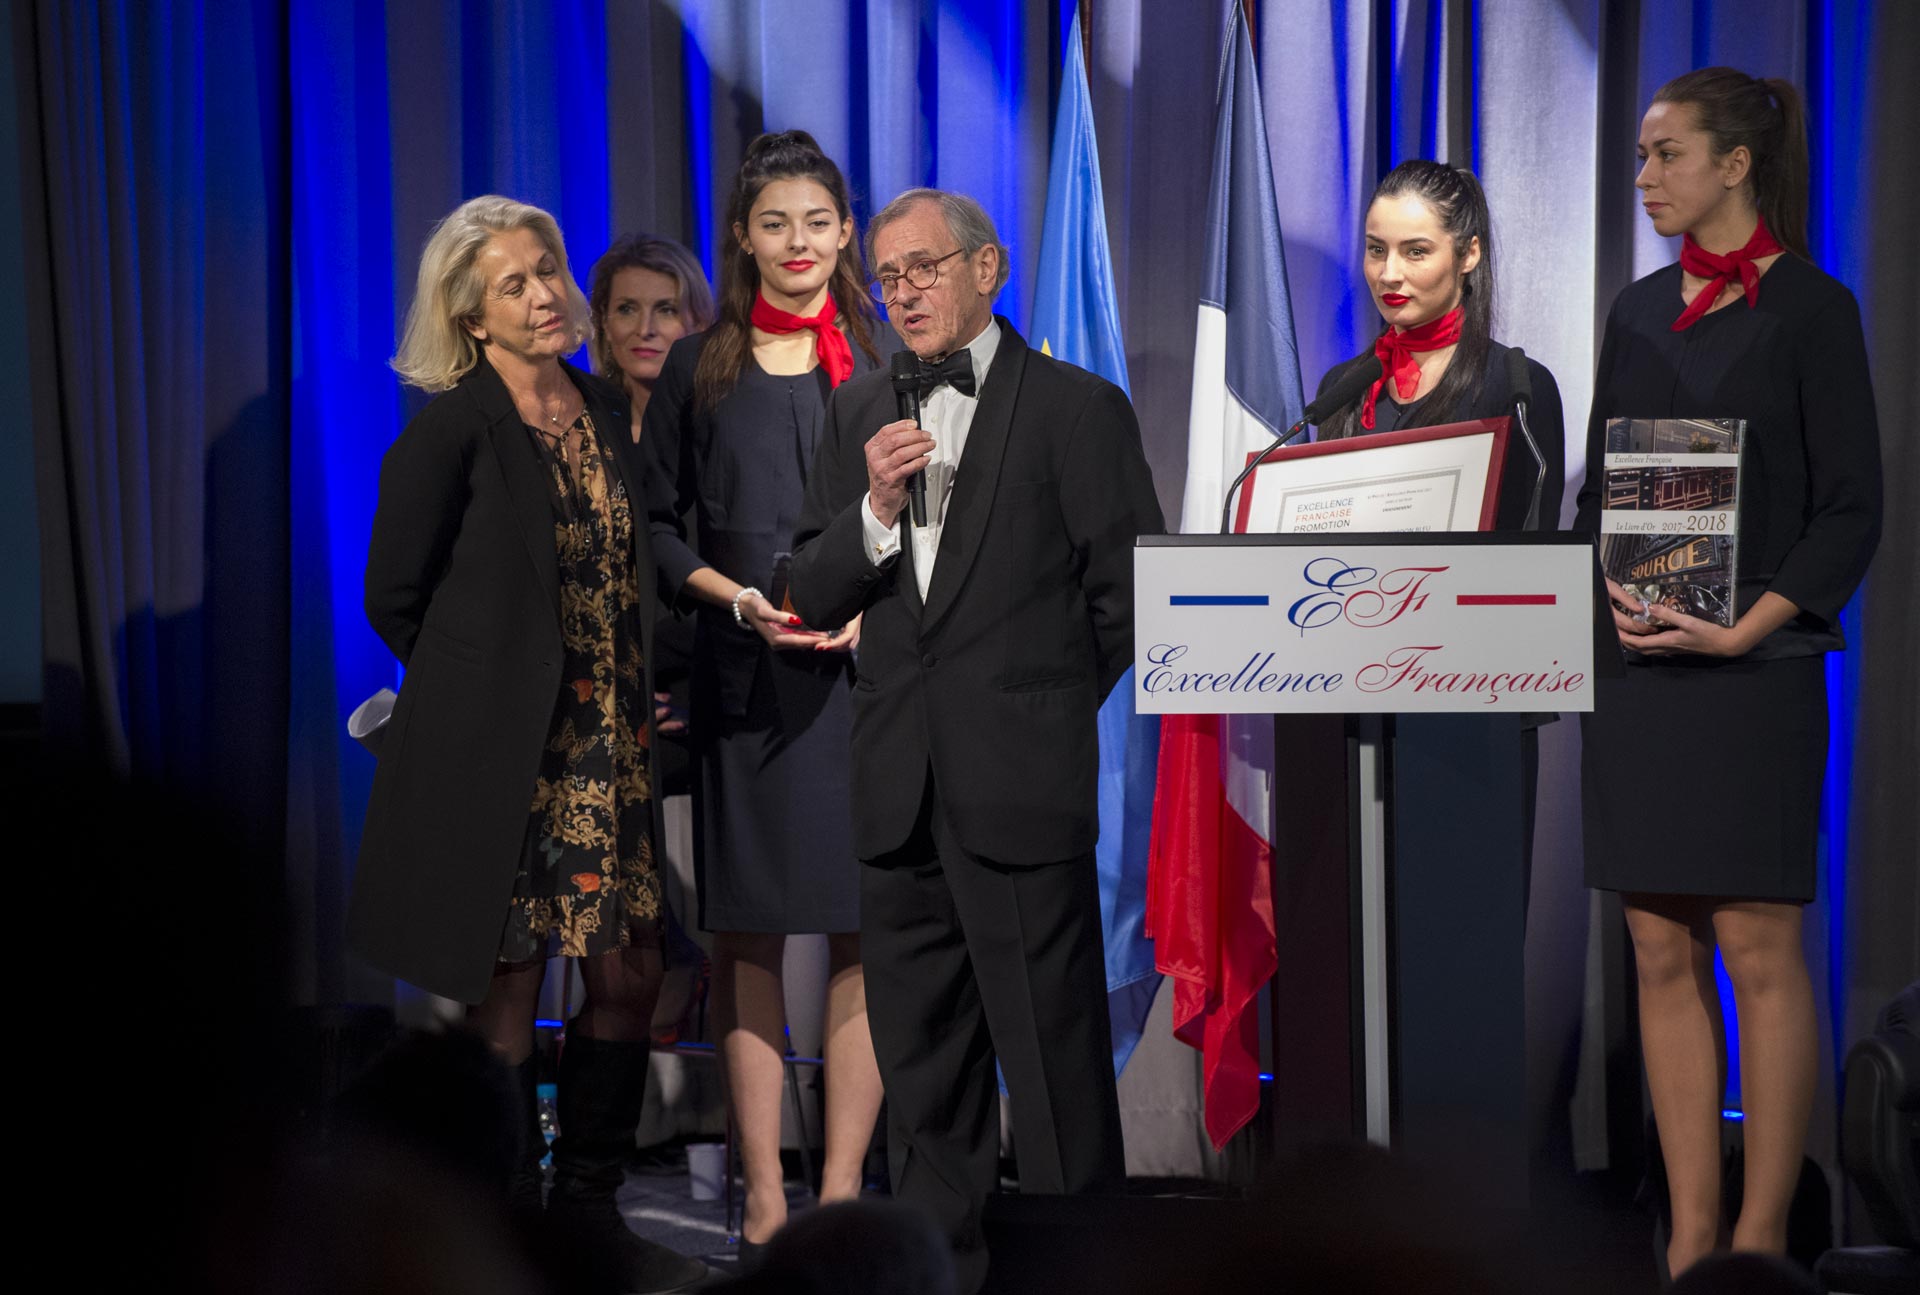 Le Cordon Bleu honoured at the annual Excellence Française ceremony